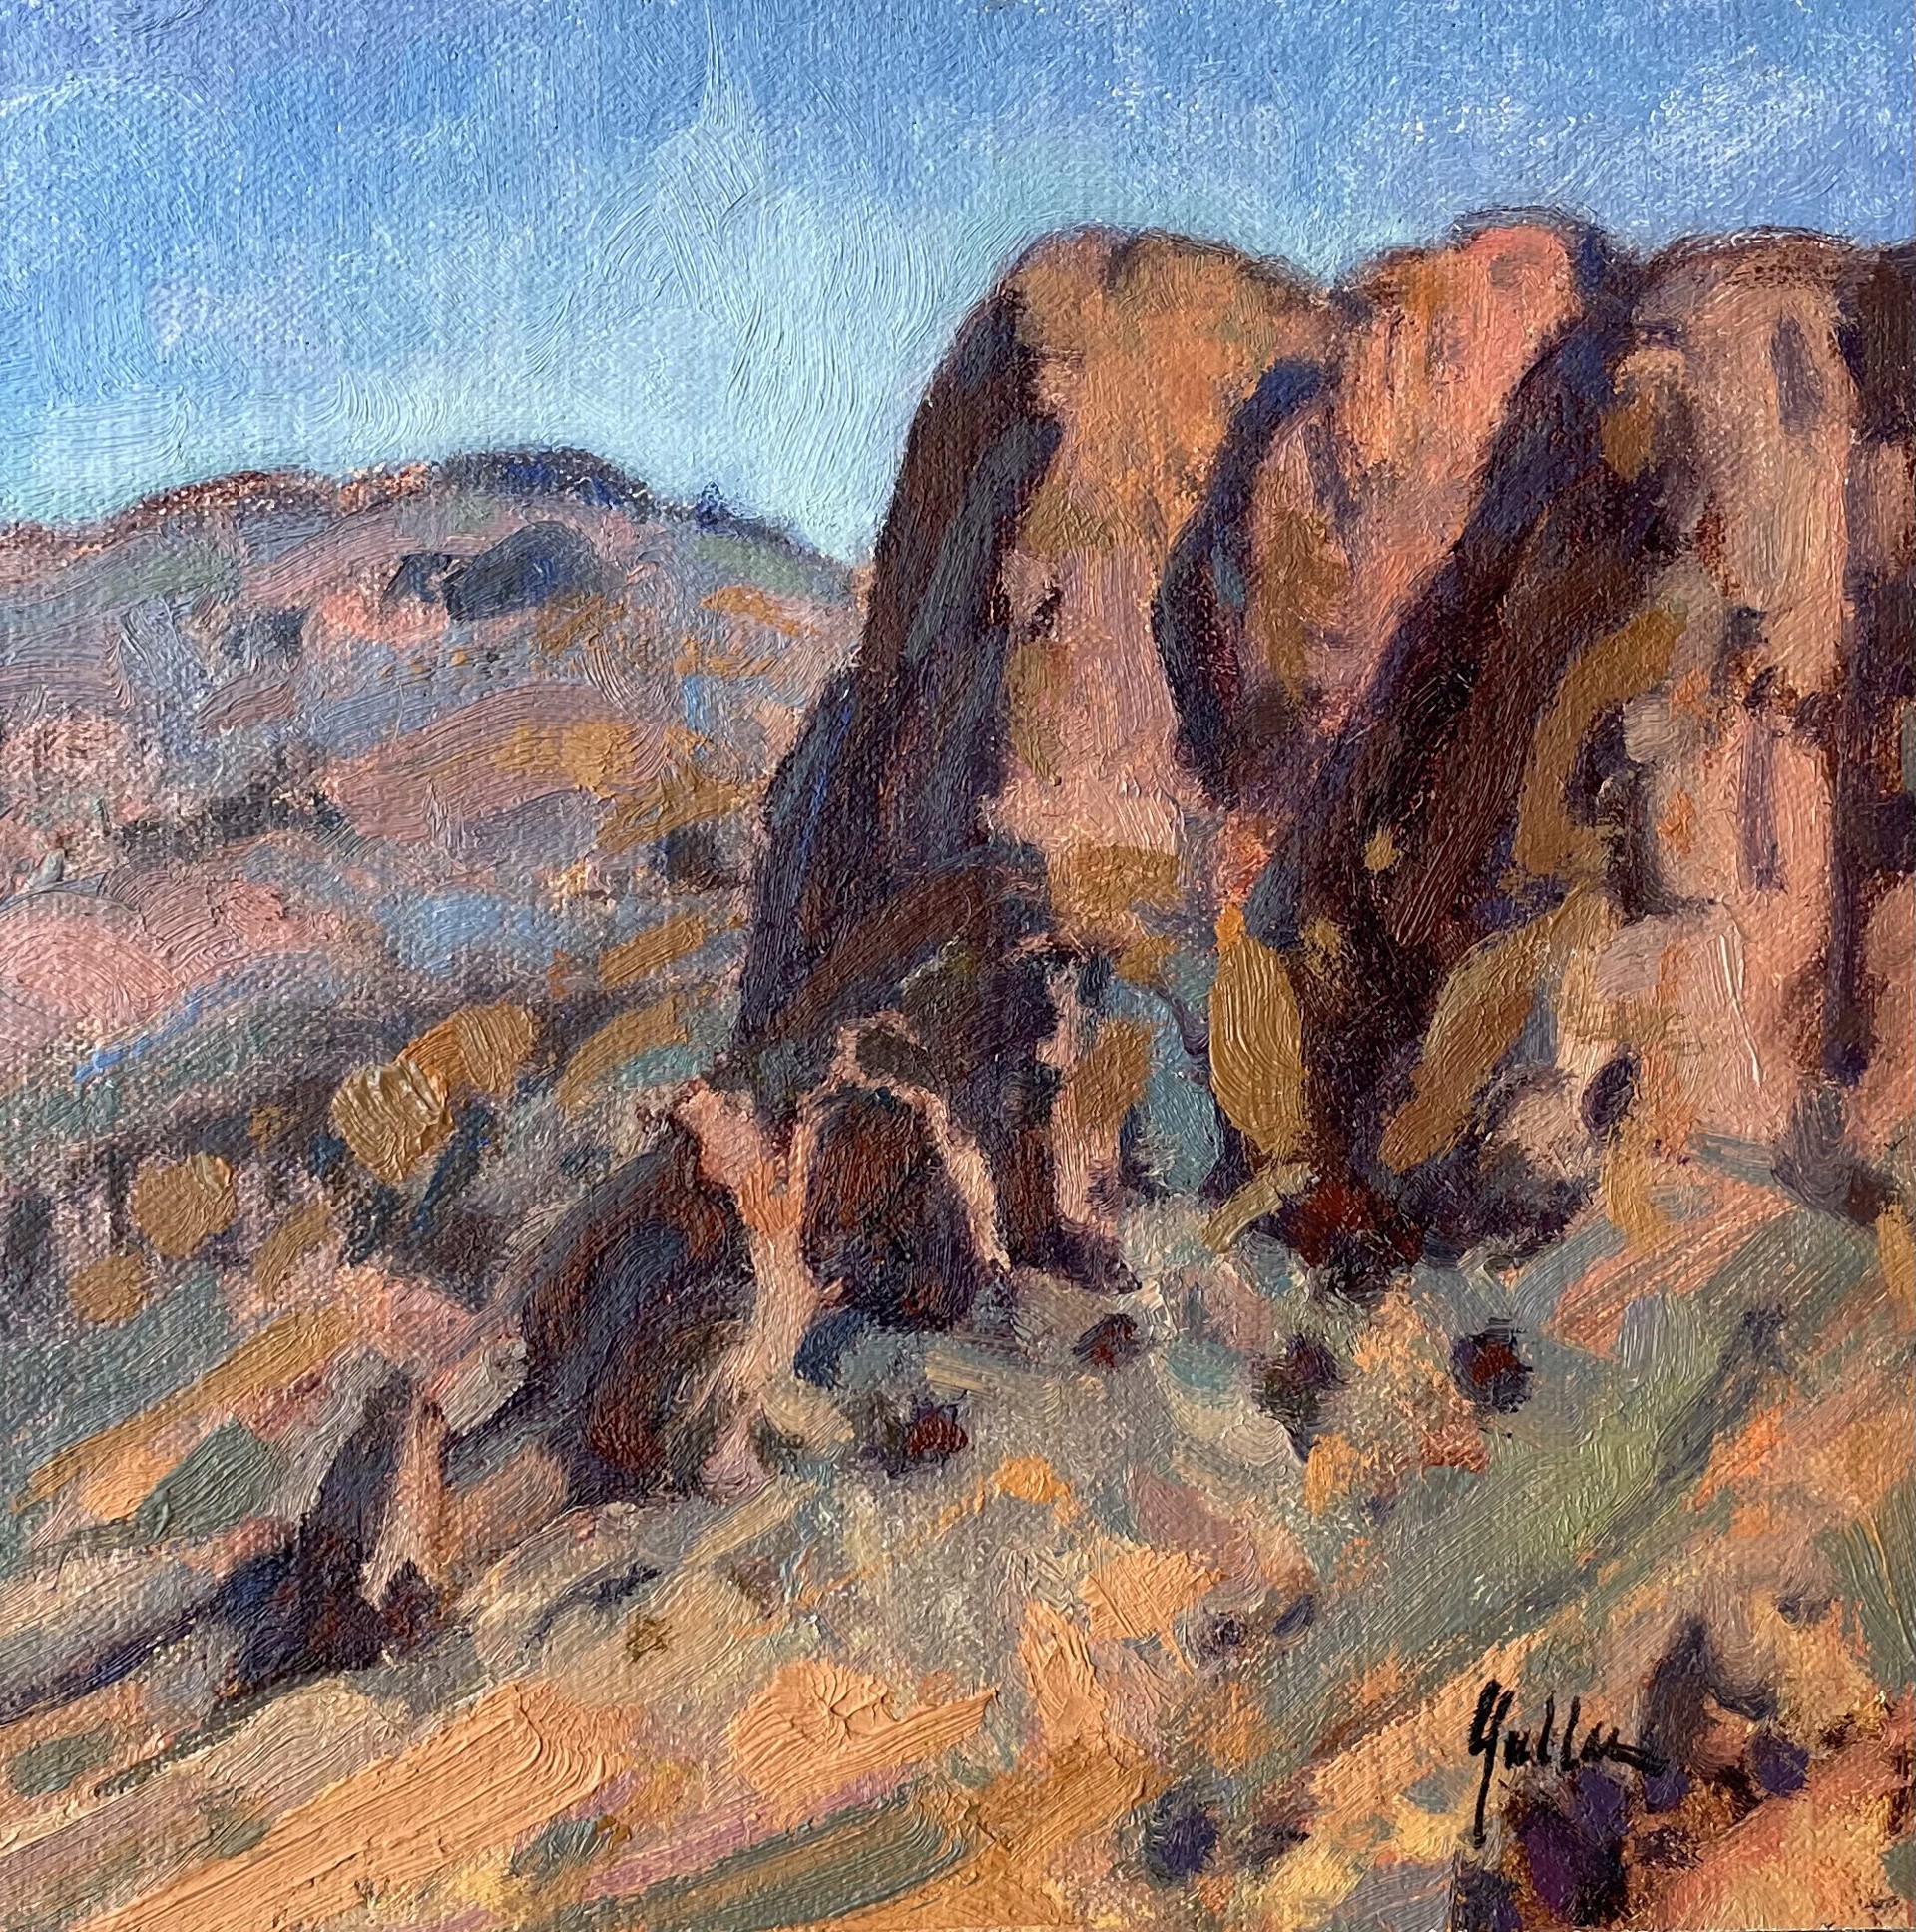 Desert Color, Superstition Mountains by Bill Gallen